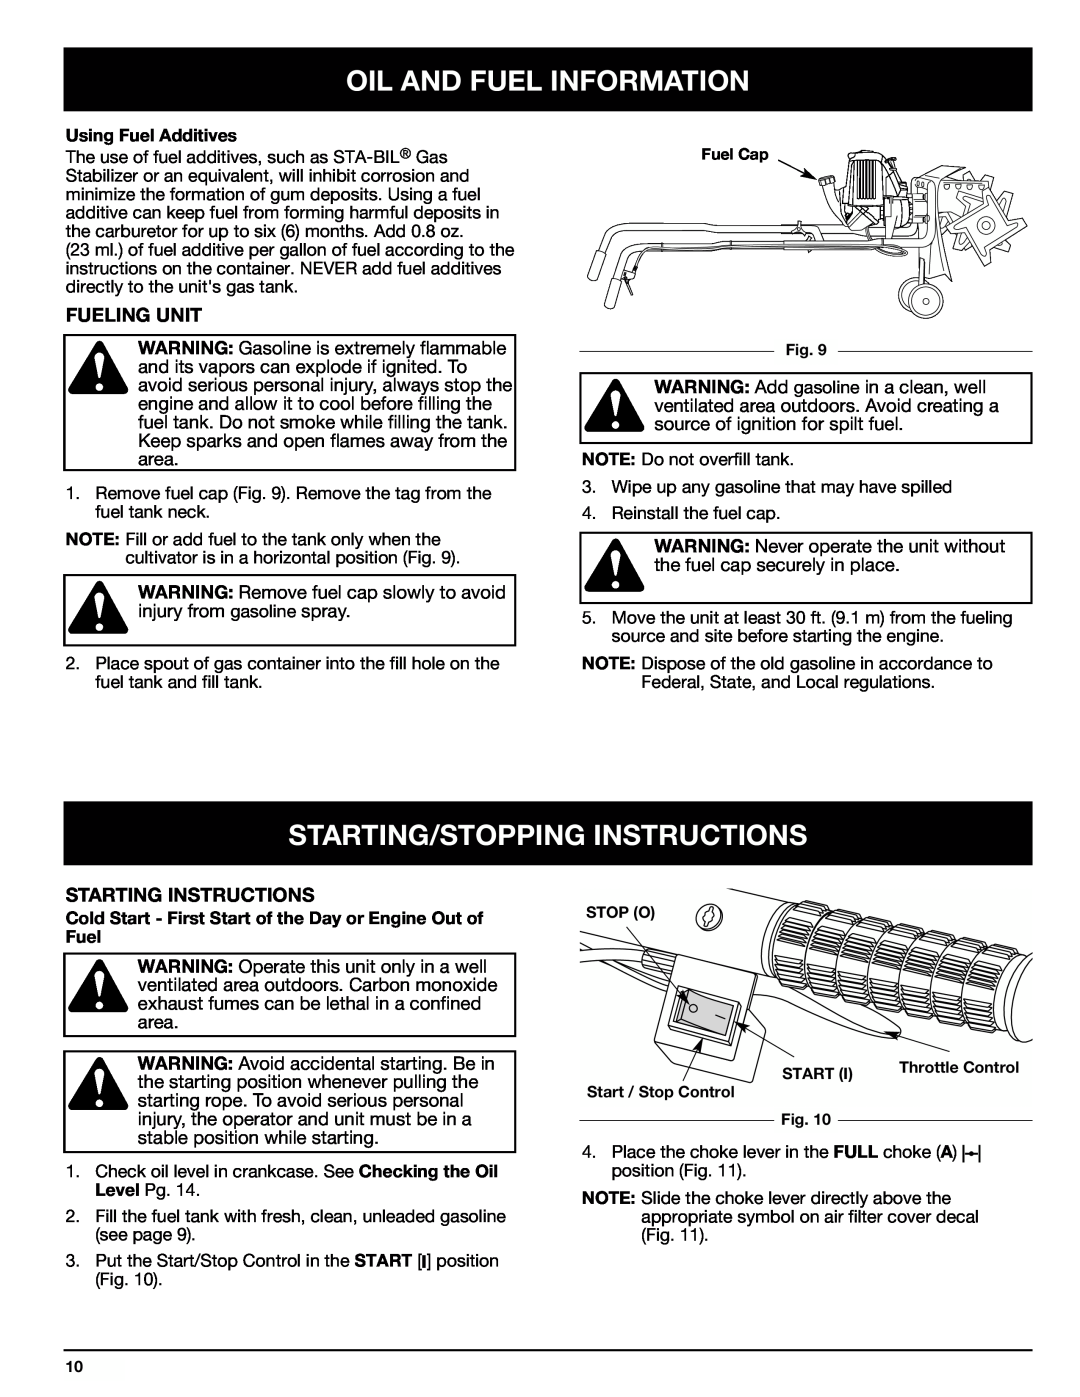 Ryobi Outdoor 510r manual Starting/Stopping Instructions, Fueling Unit, Starting Instructions, Oil And Fuel Information 